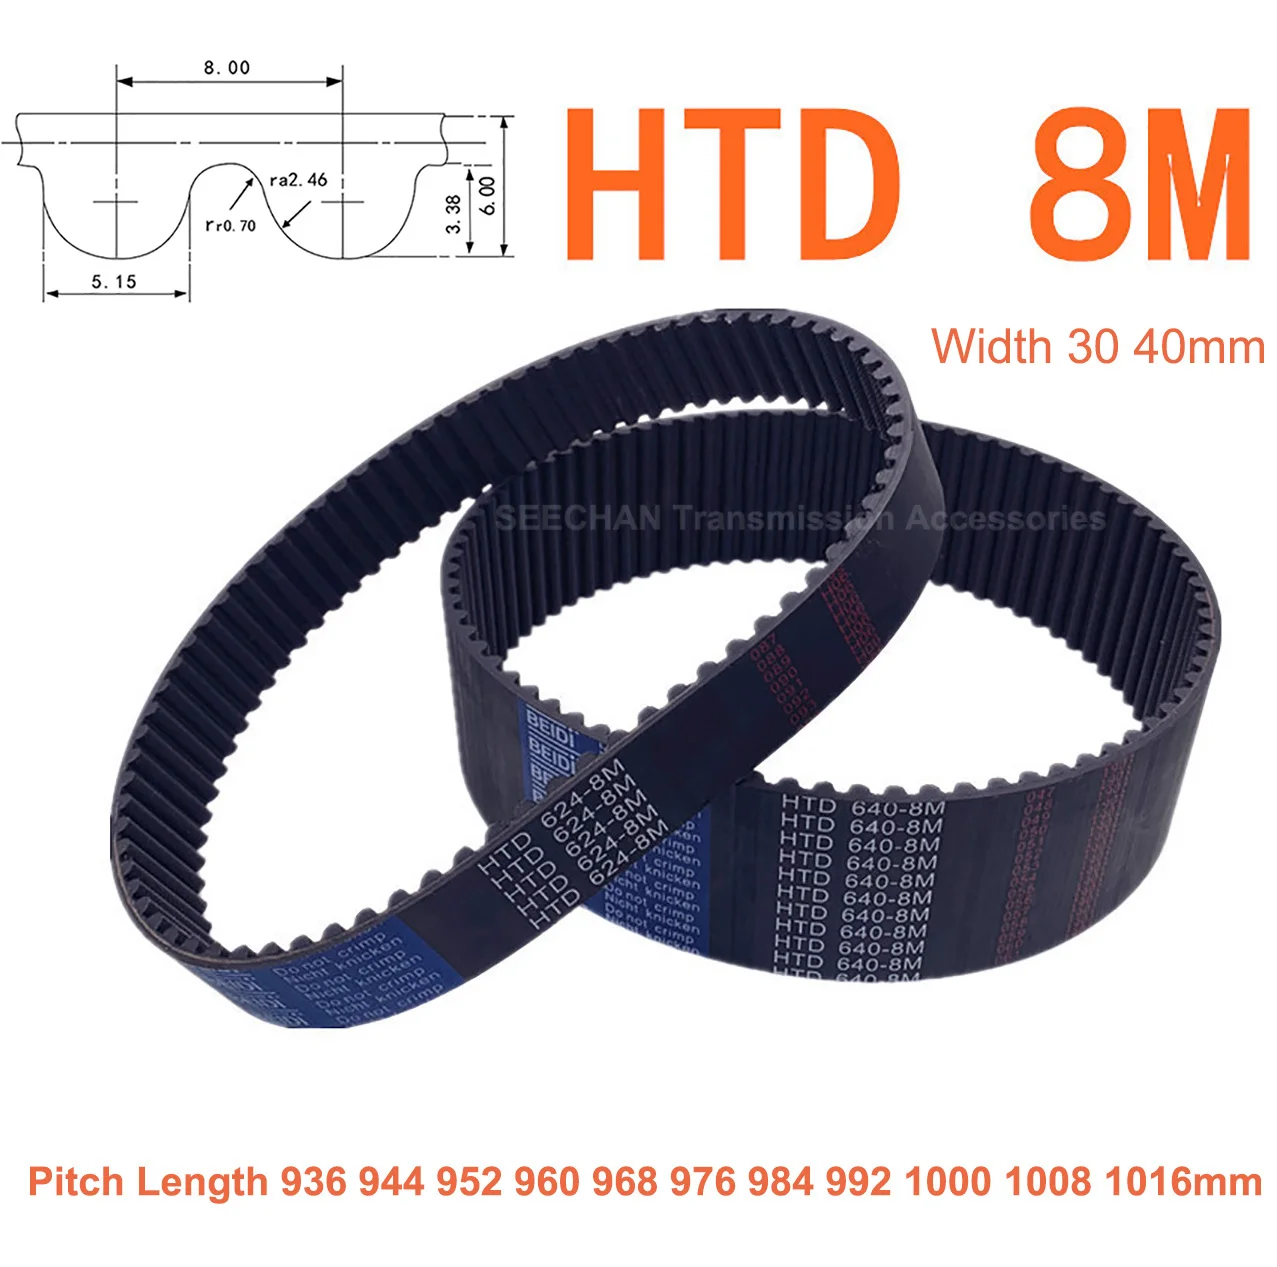 

HTD 8M Rubber Closed Loop Timing Belt Width 30 40mm Synchronous Belt Perimeter 936 944 952 960 968 976 984 992 1000 1008 1016mm